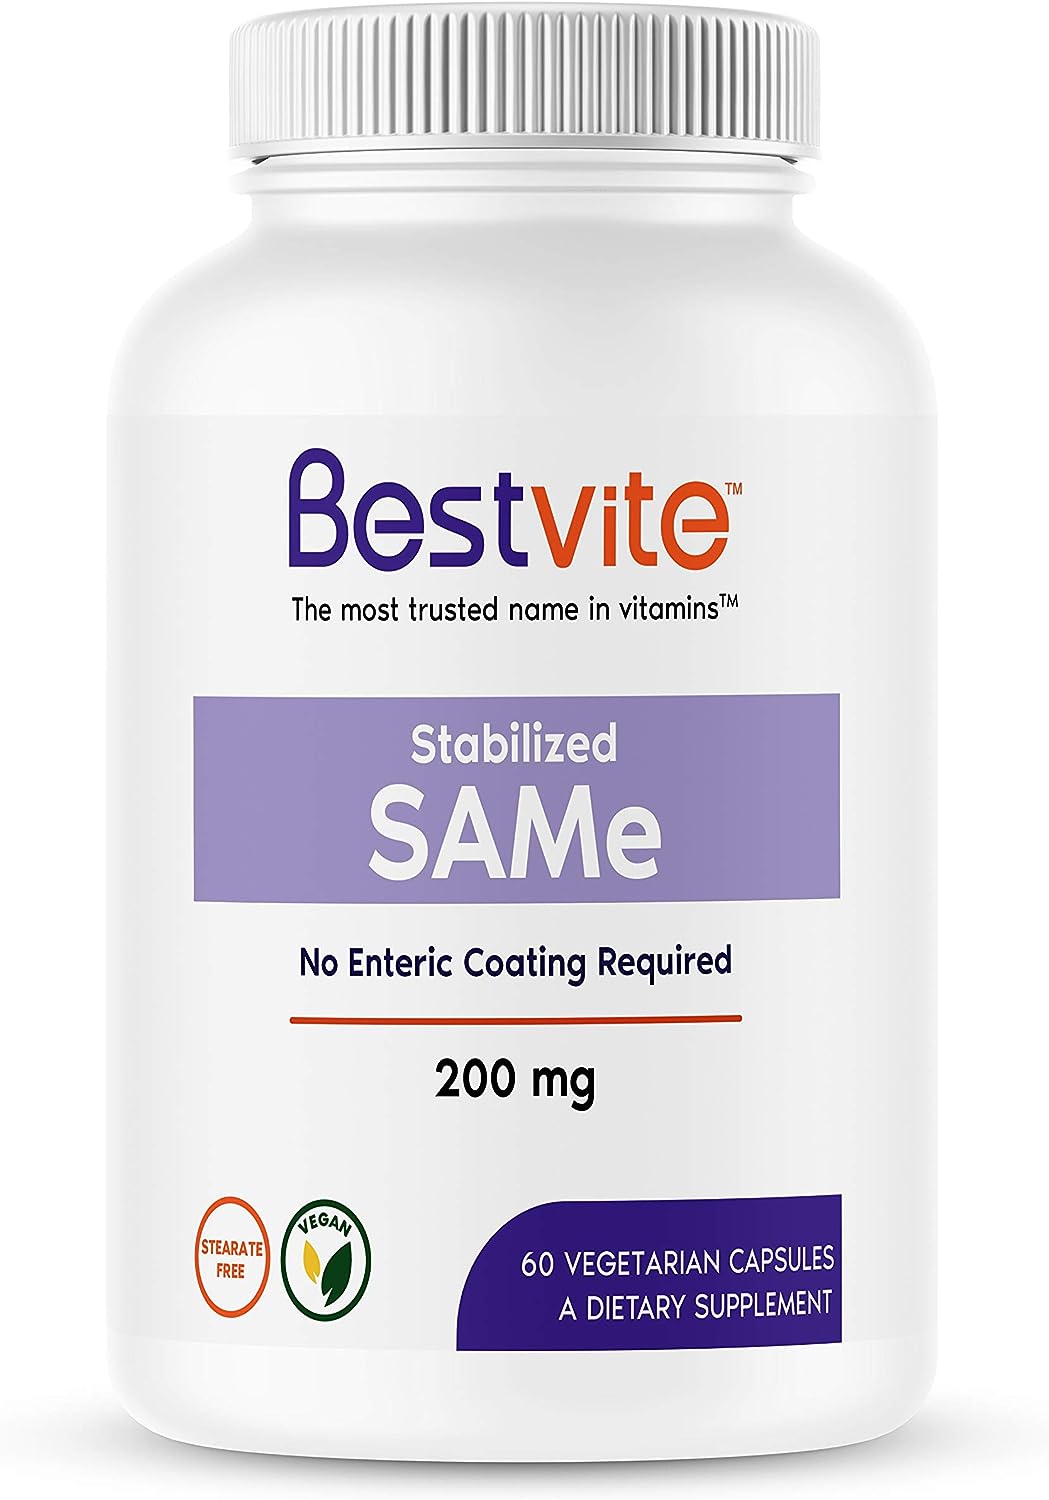 BESTVITE SAM-e 200mg Stabilized (60 Vegetarian Capsules) - Easy to Swallow Capsule Form - No Enteric Coat Needed - No Titanium Dioxide - No Stearates - Vegan - Non GMO - Gluten Free